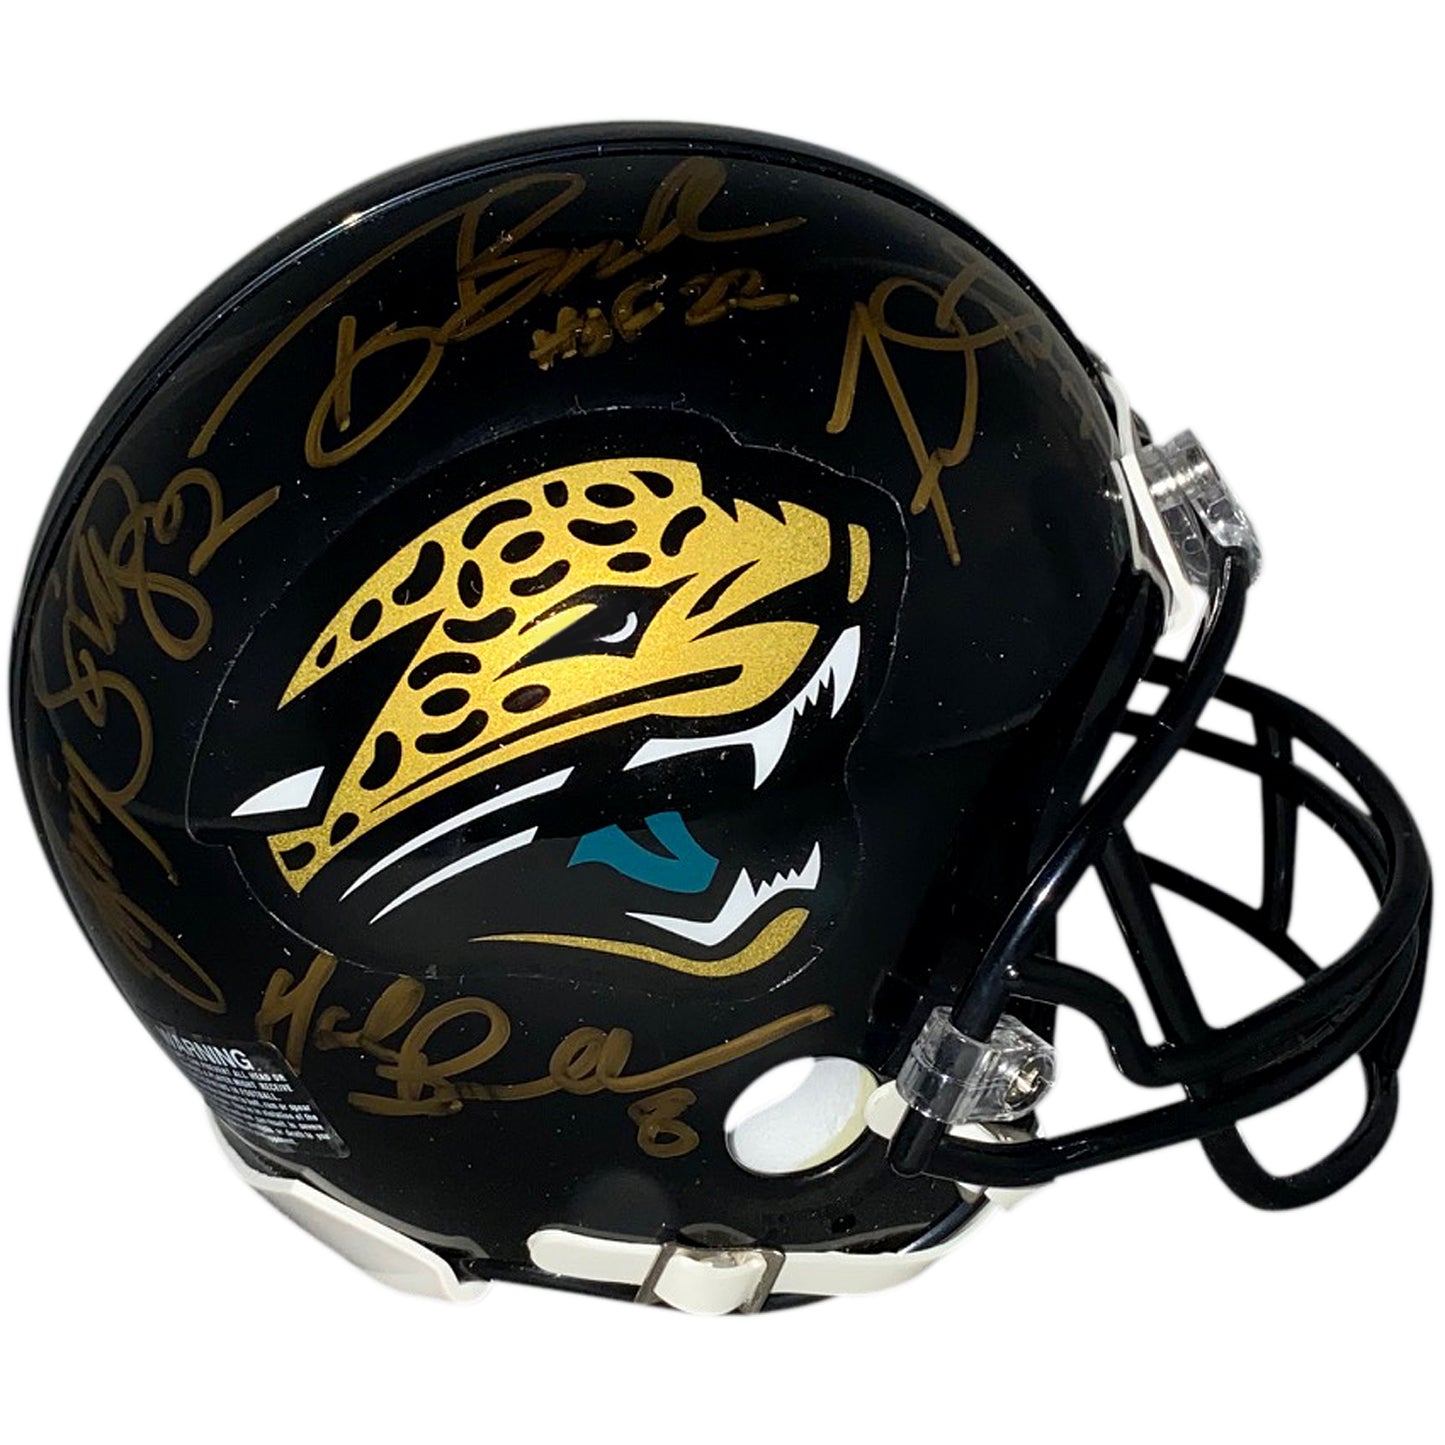 Tony Boselli, Mark Brunell, Jimmy Smith And Fred Taylor Autographed Jacksonville Jaguars Mini Helmet - Pride of the Jaguars